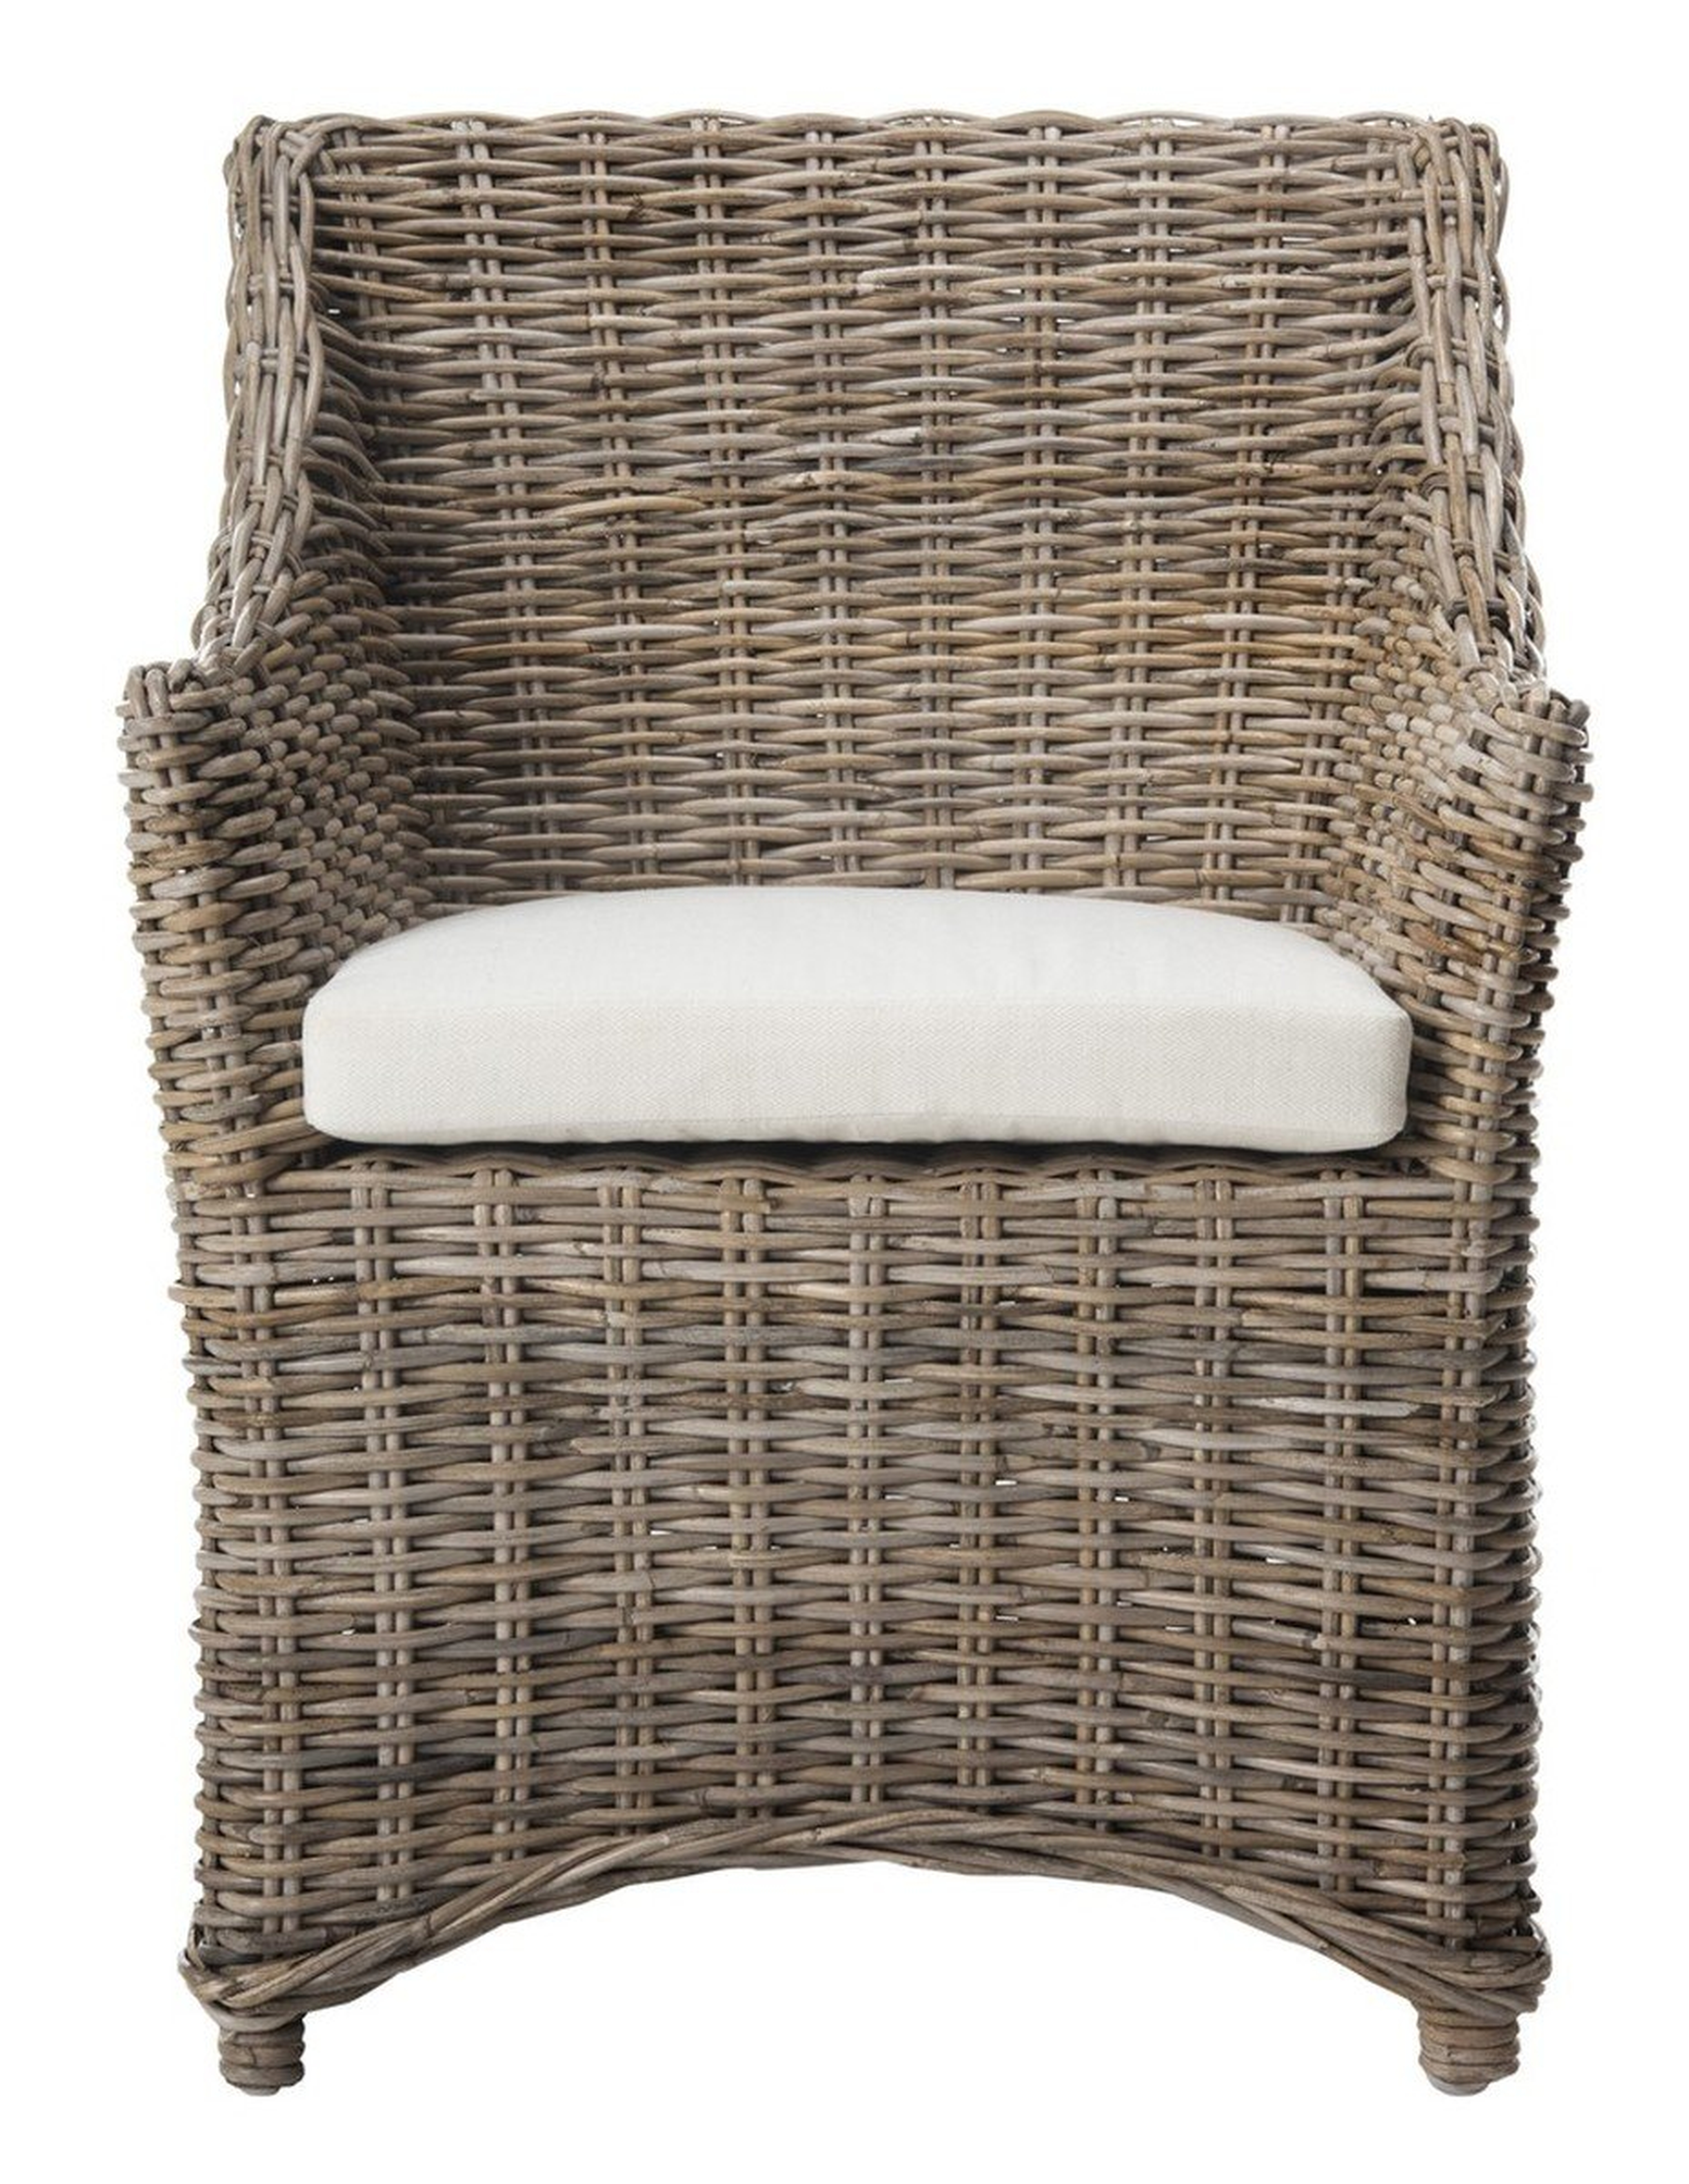 Ventura Rattan Arm Chair - Brown/White - Arlo Home - Arlo Home